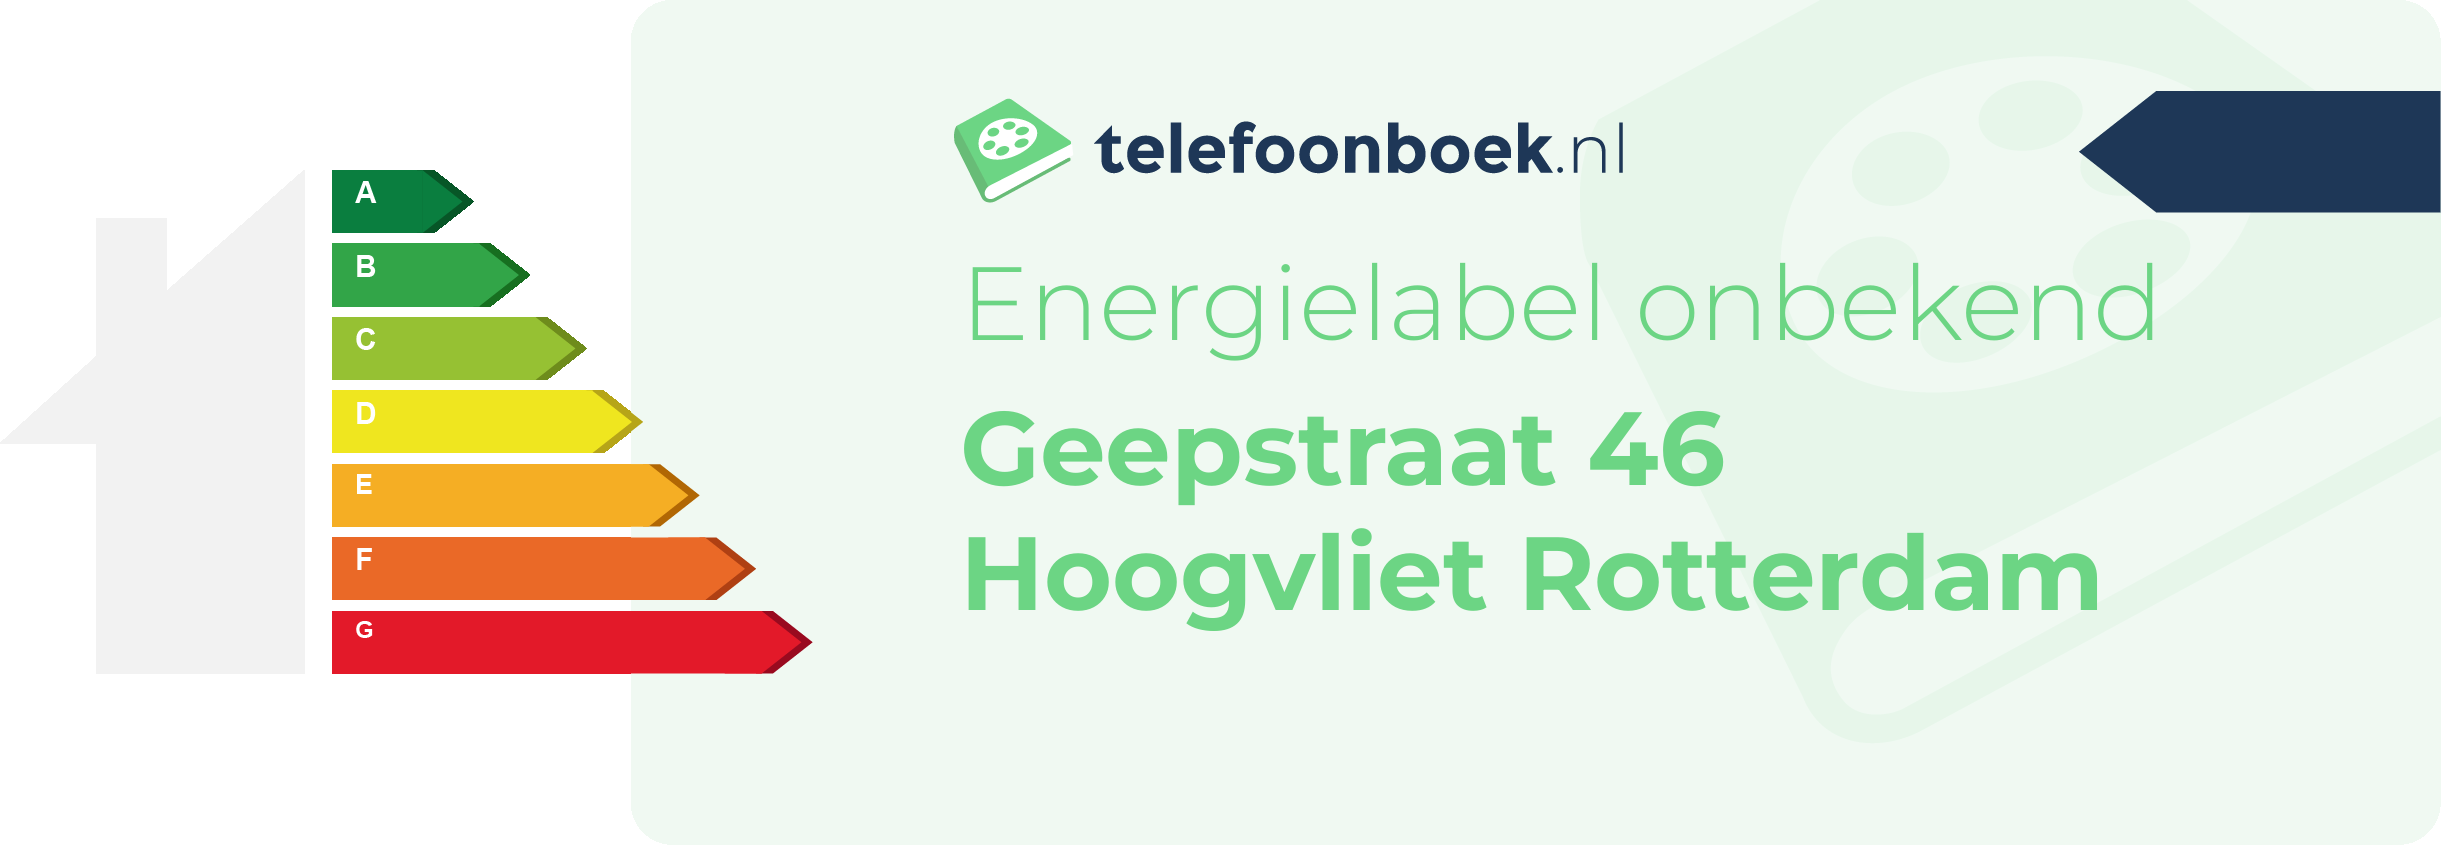 Energielabel Geepstraat 46 Hoogvliet Rotterdam